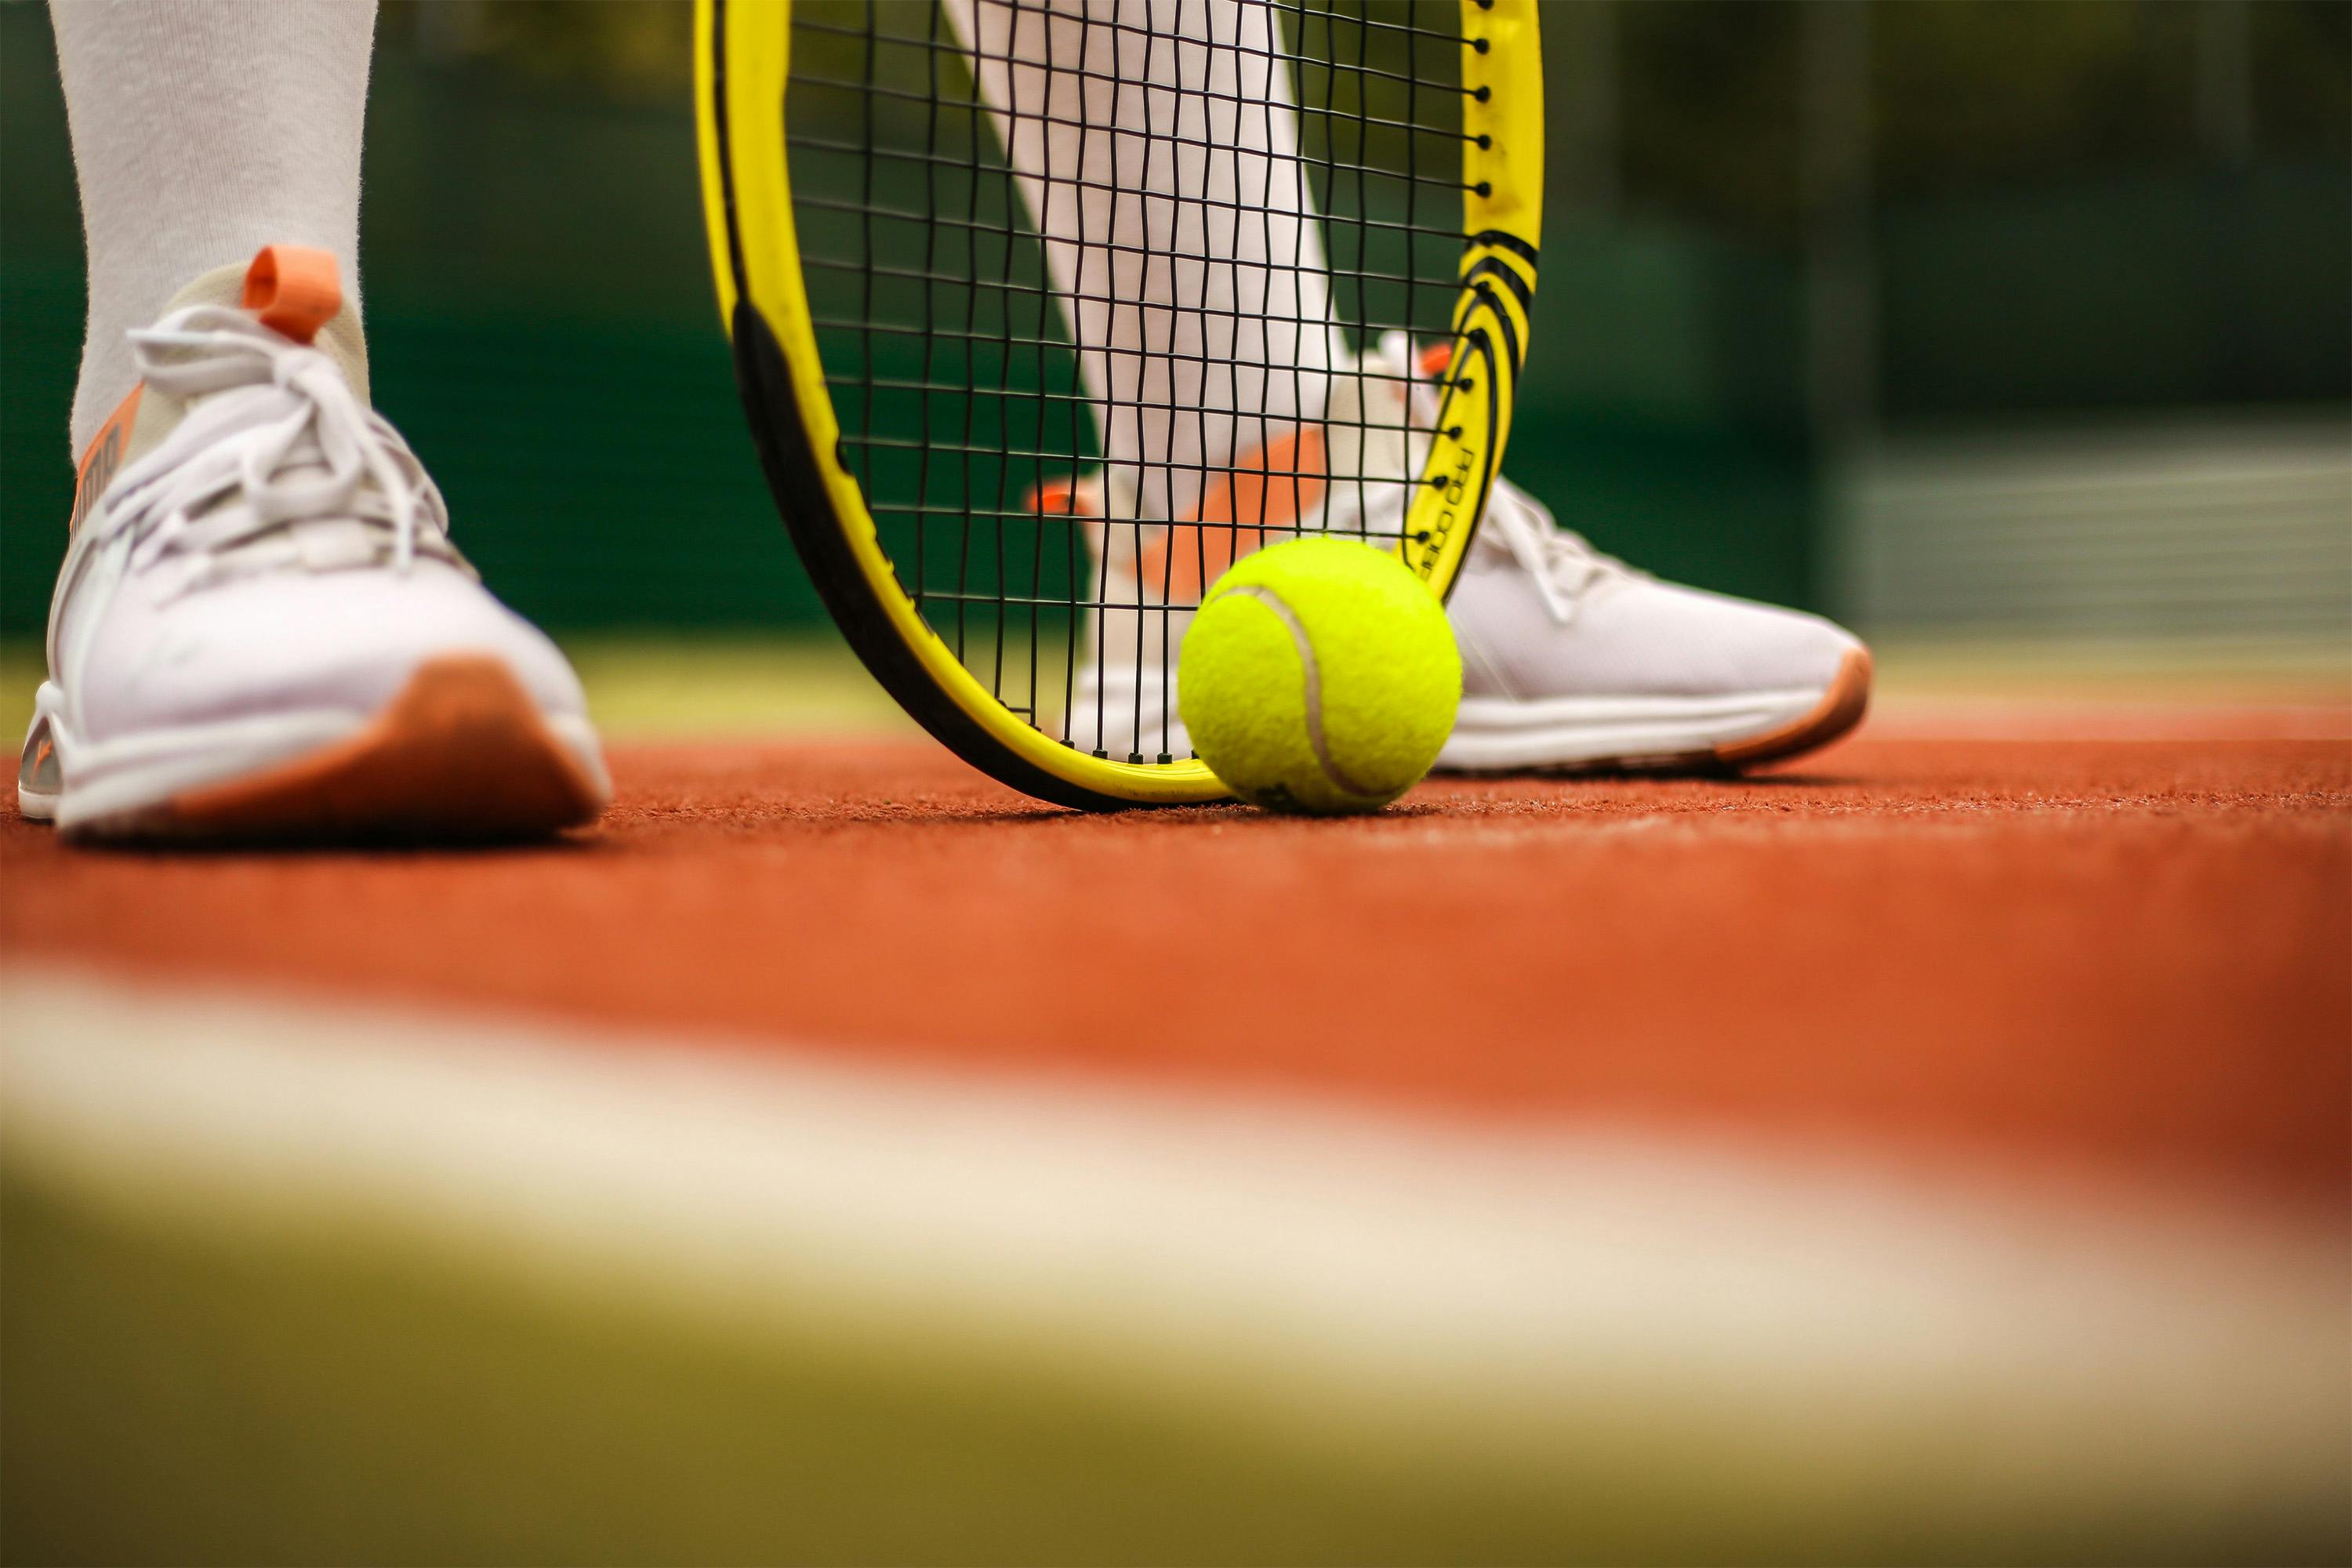 A tennis raquet being held down behind a tennis ball on a tennis court